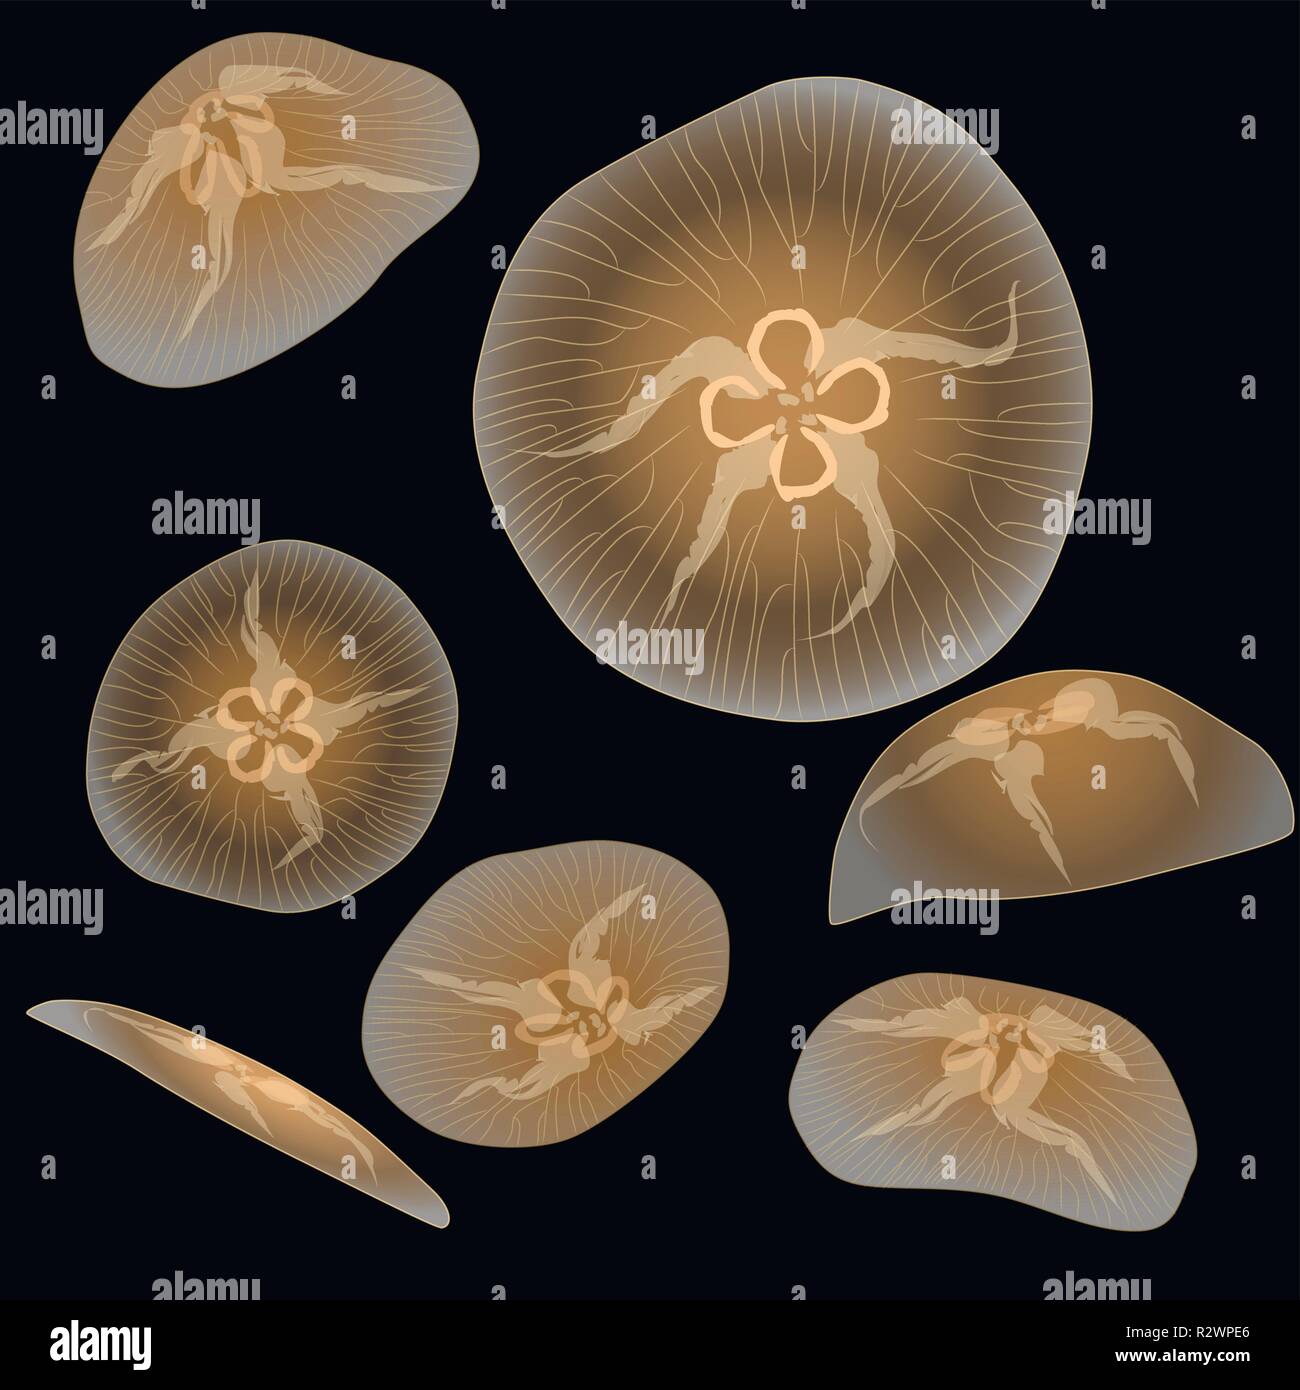 Group of light jellyfishs on black background, vector illustration Stock Vector